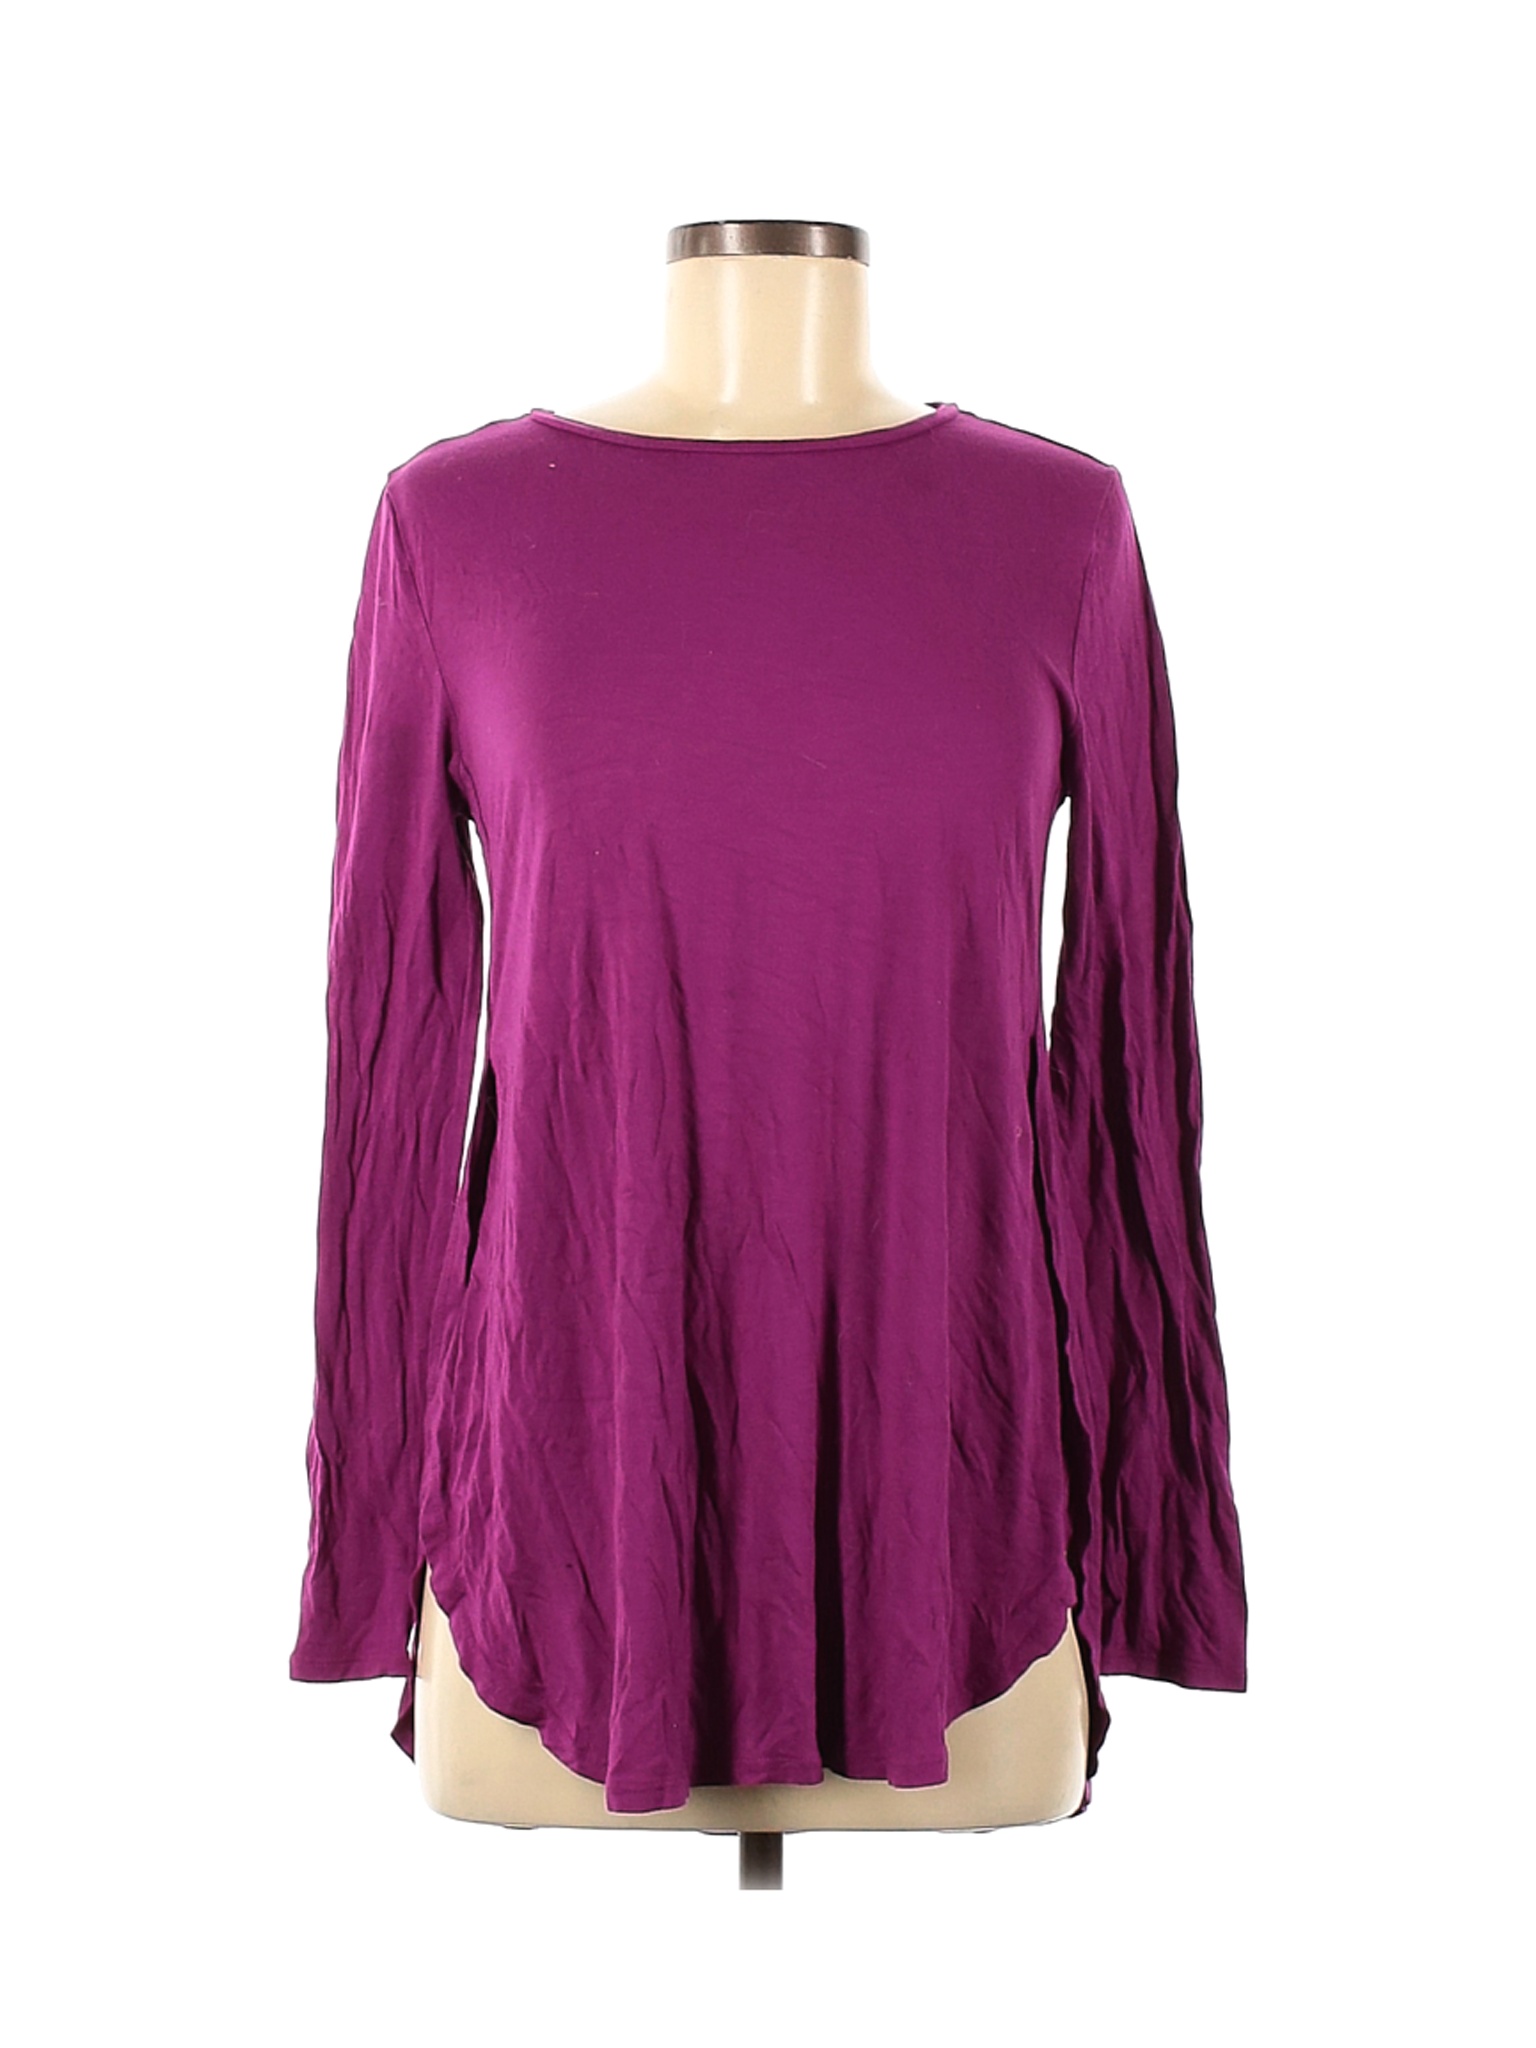 Old Navy Women Purple Long Sleeve T-Shirt M | eBay